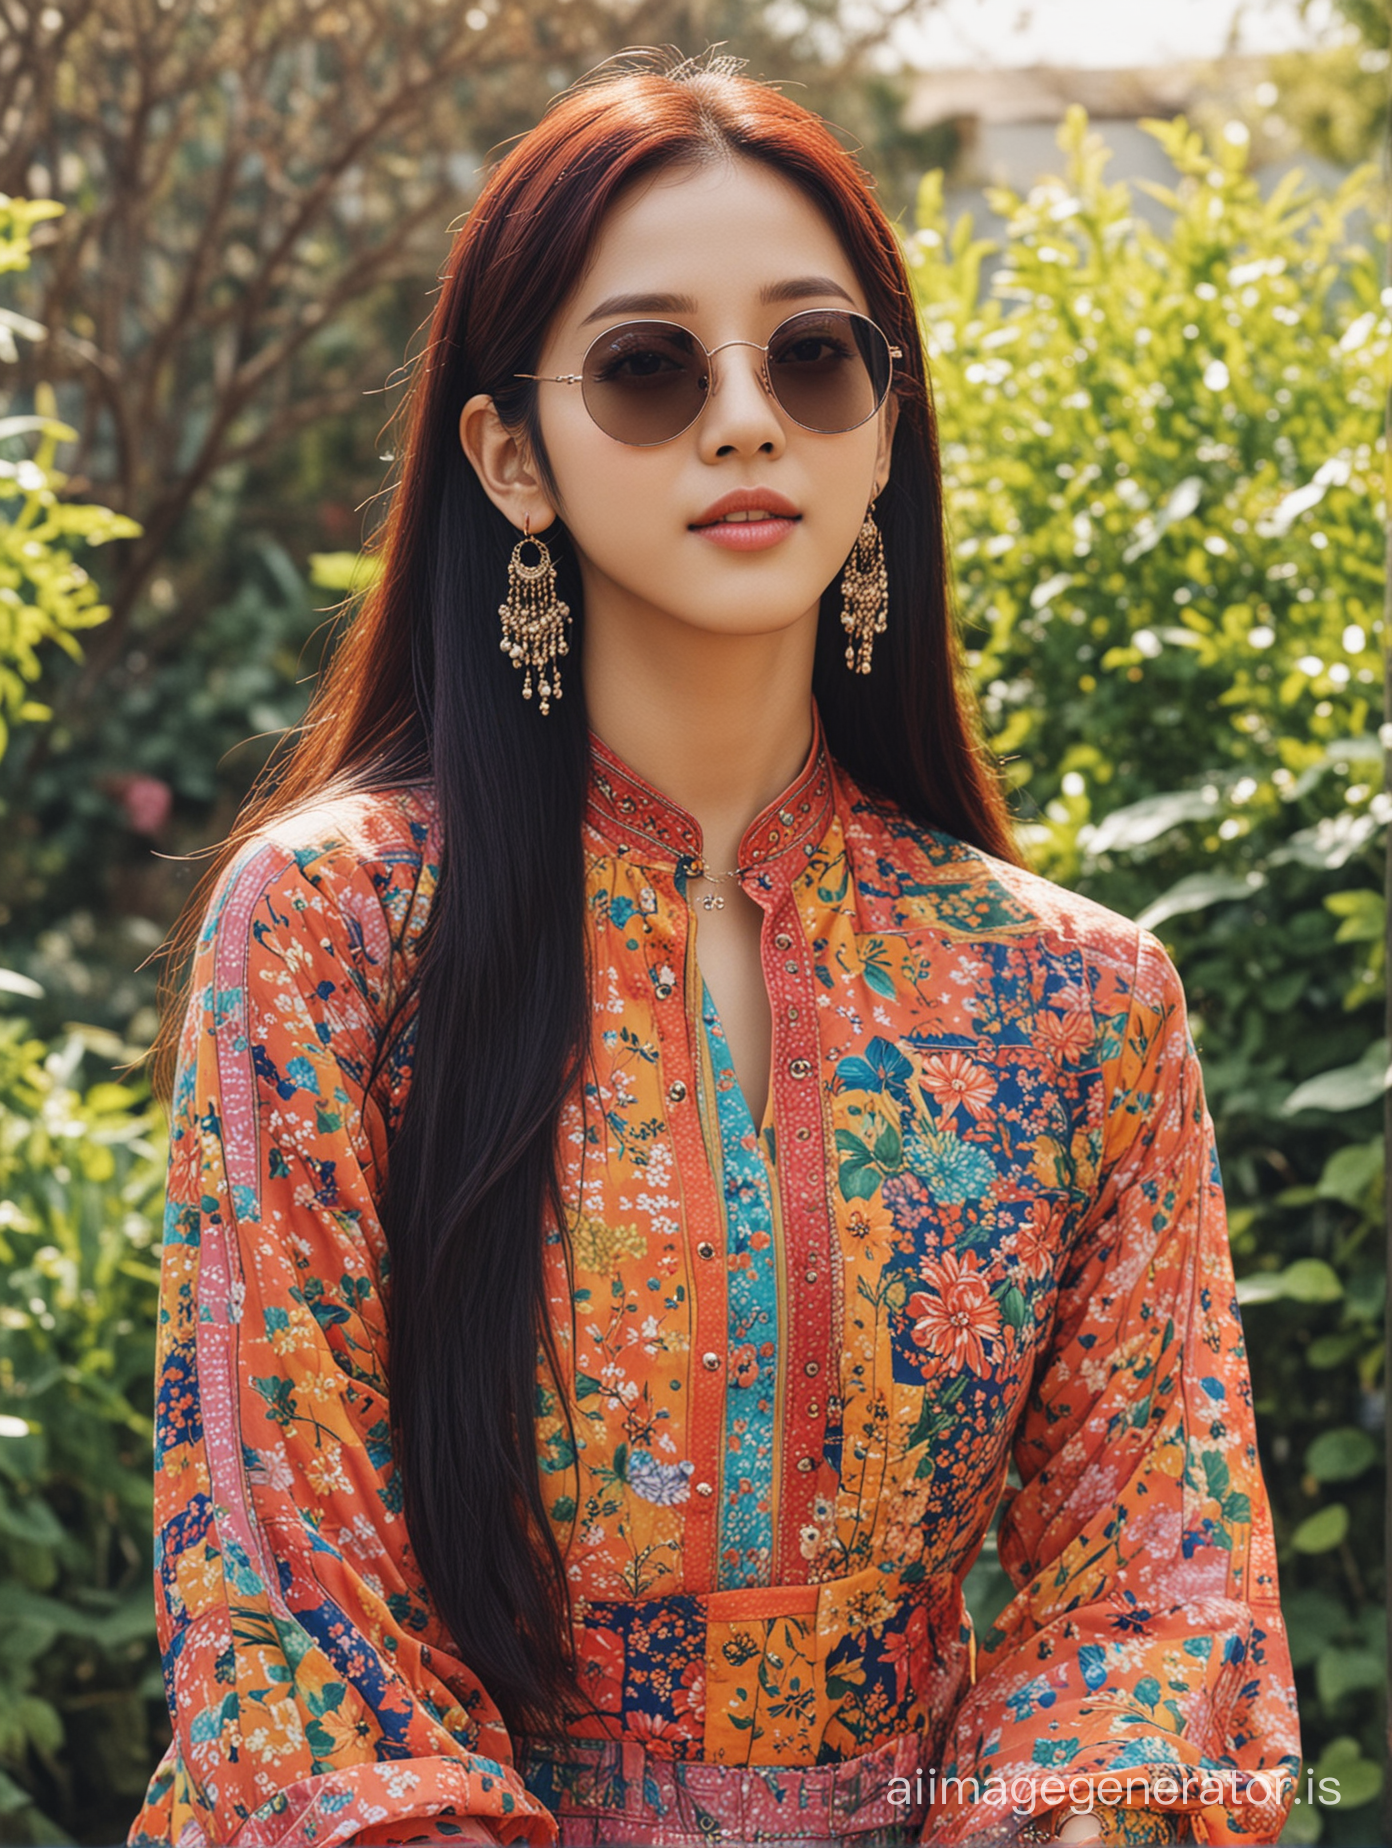 Blackpink Jisoo wearing a colorful salwar kameez and sunglasses and closeup shot in a garden,